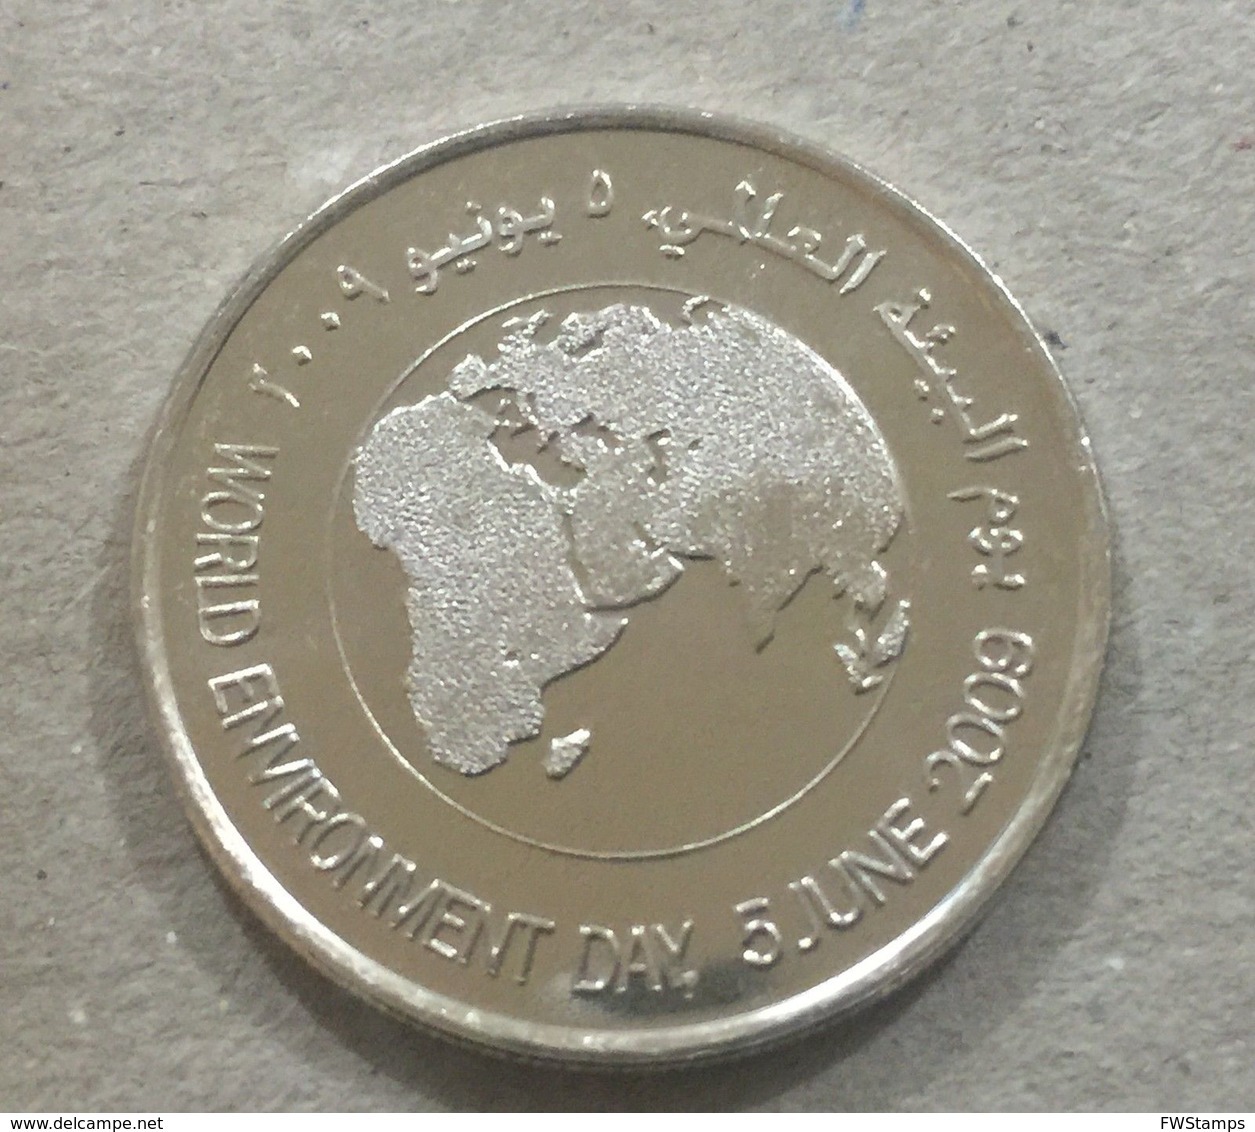 UAE 2009 UNC 1 Dirham Coin World Environment Day - Ver. Arab. Emirate